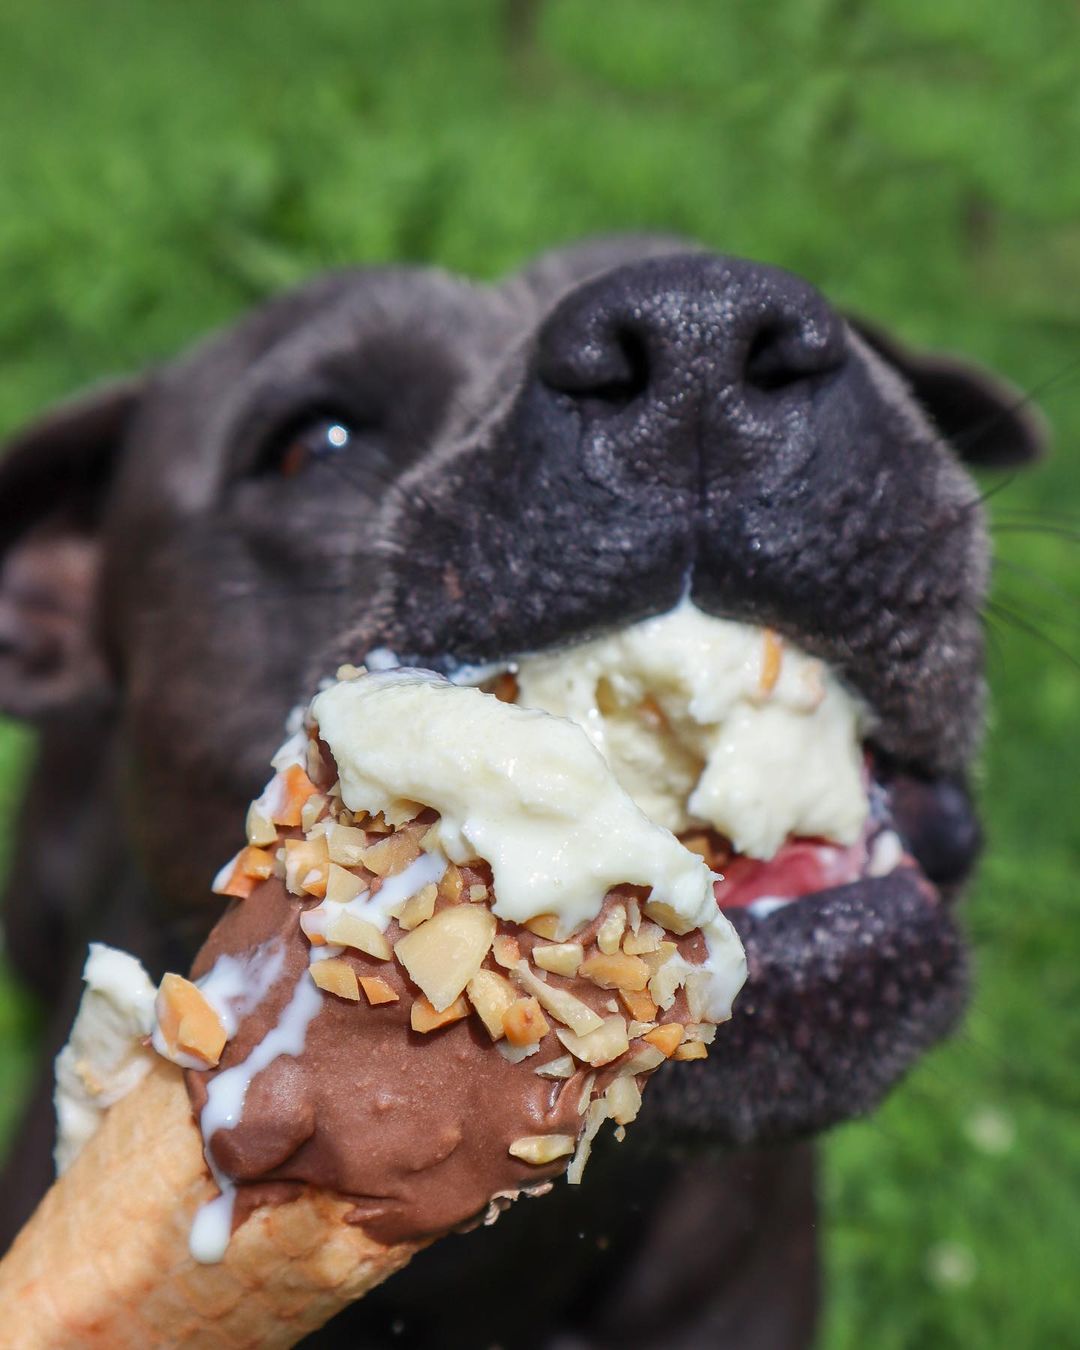 Peanut Butter Ice Cream Mix - Scoop Dog  